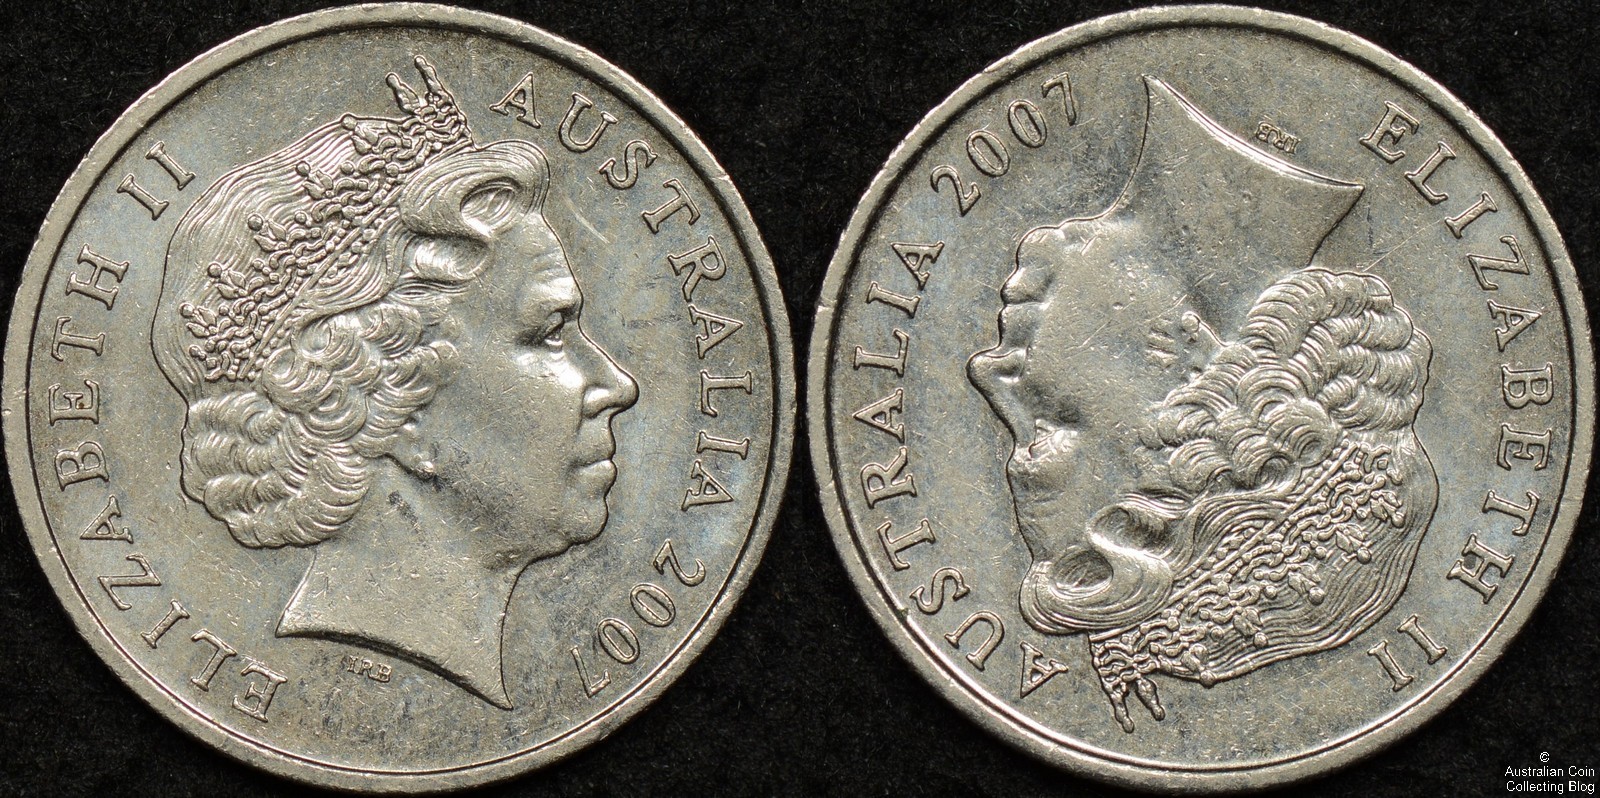 Rare Australian 50 Cent Coin Value